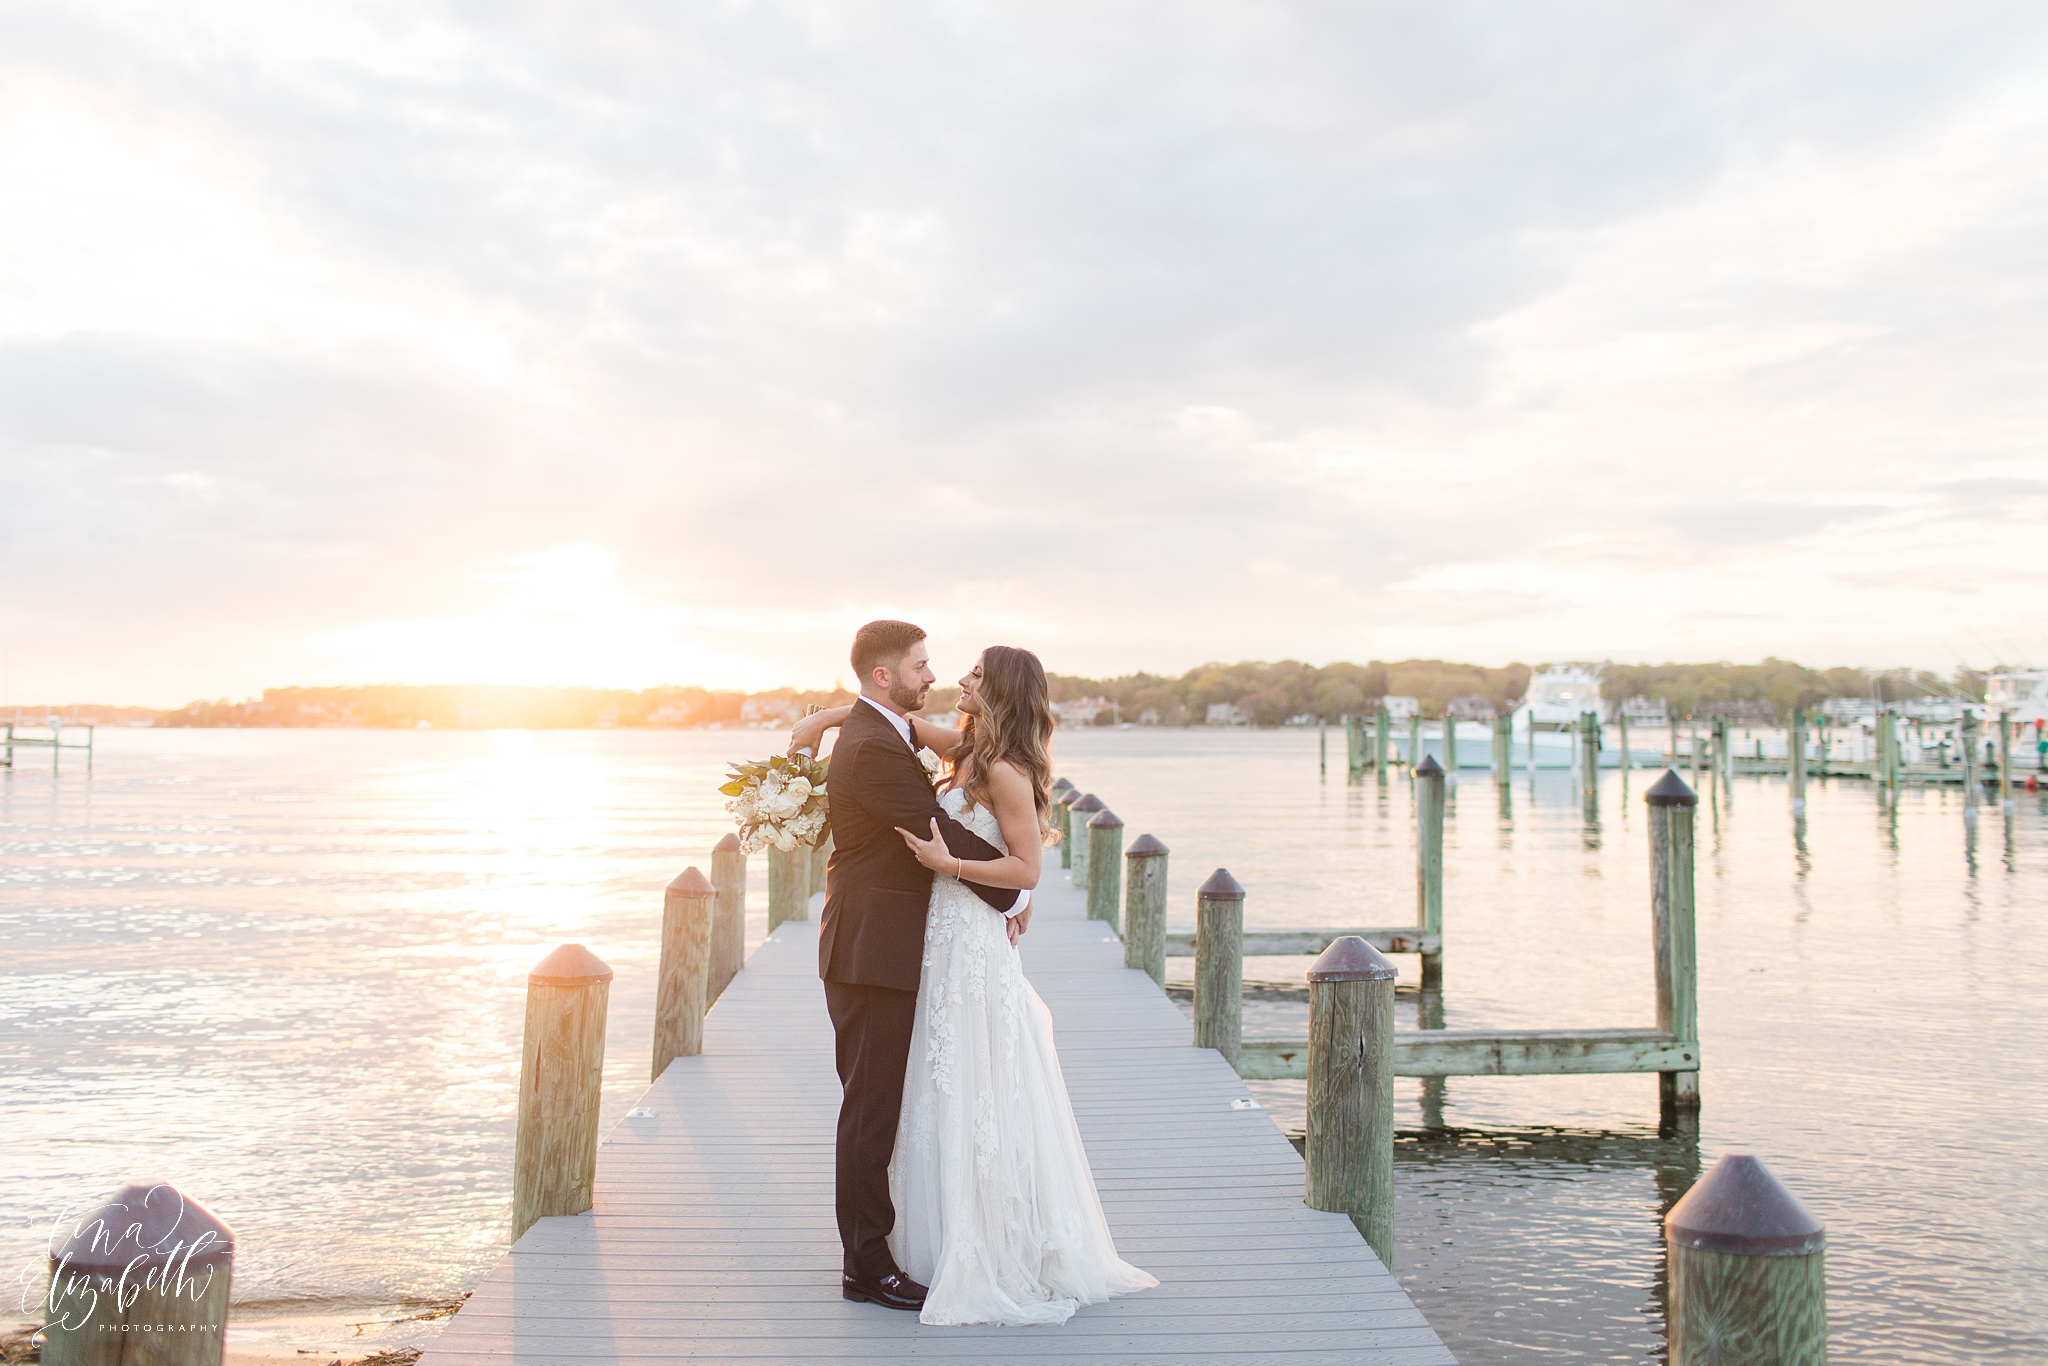 Clarks Landing Yacht Club wedding photos - Tina Elizabeth Photography